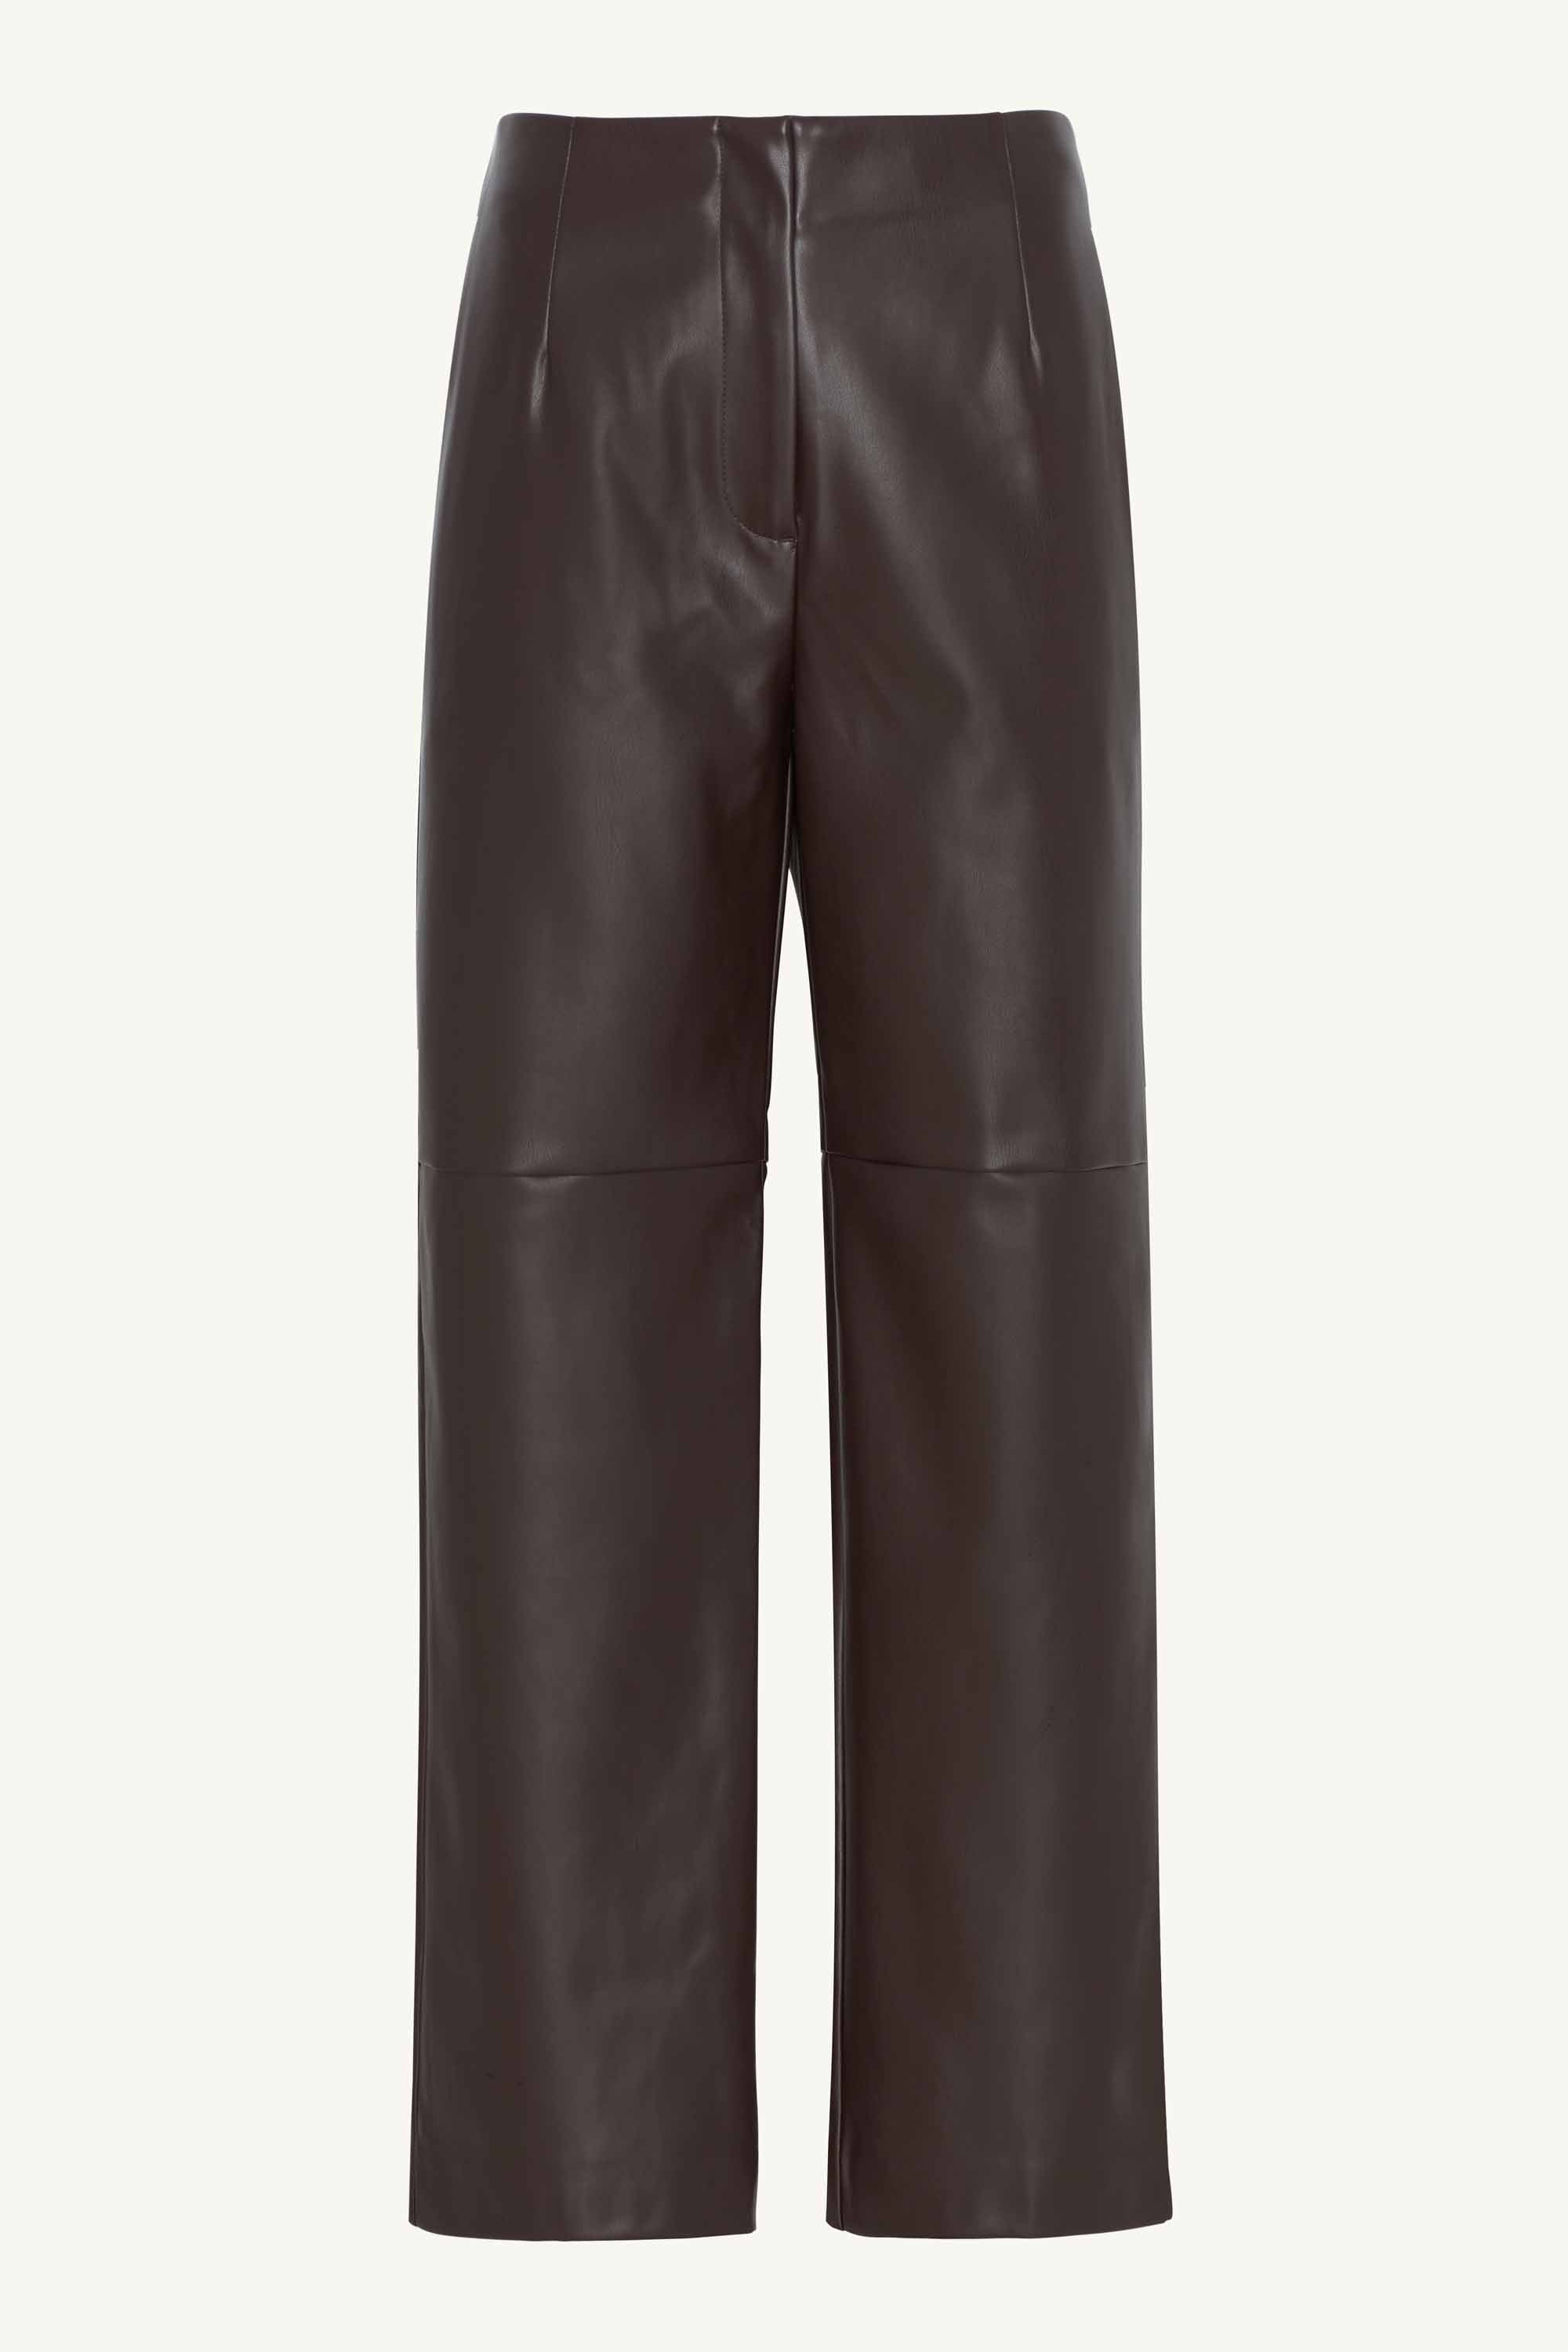 Vegan Leather Wide Leg Trousers - Java Clothing epschoolboard 